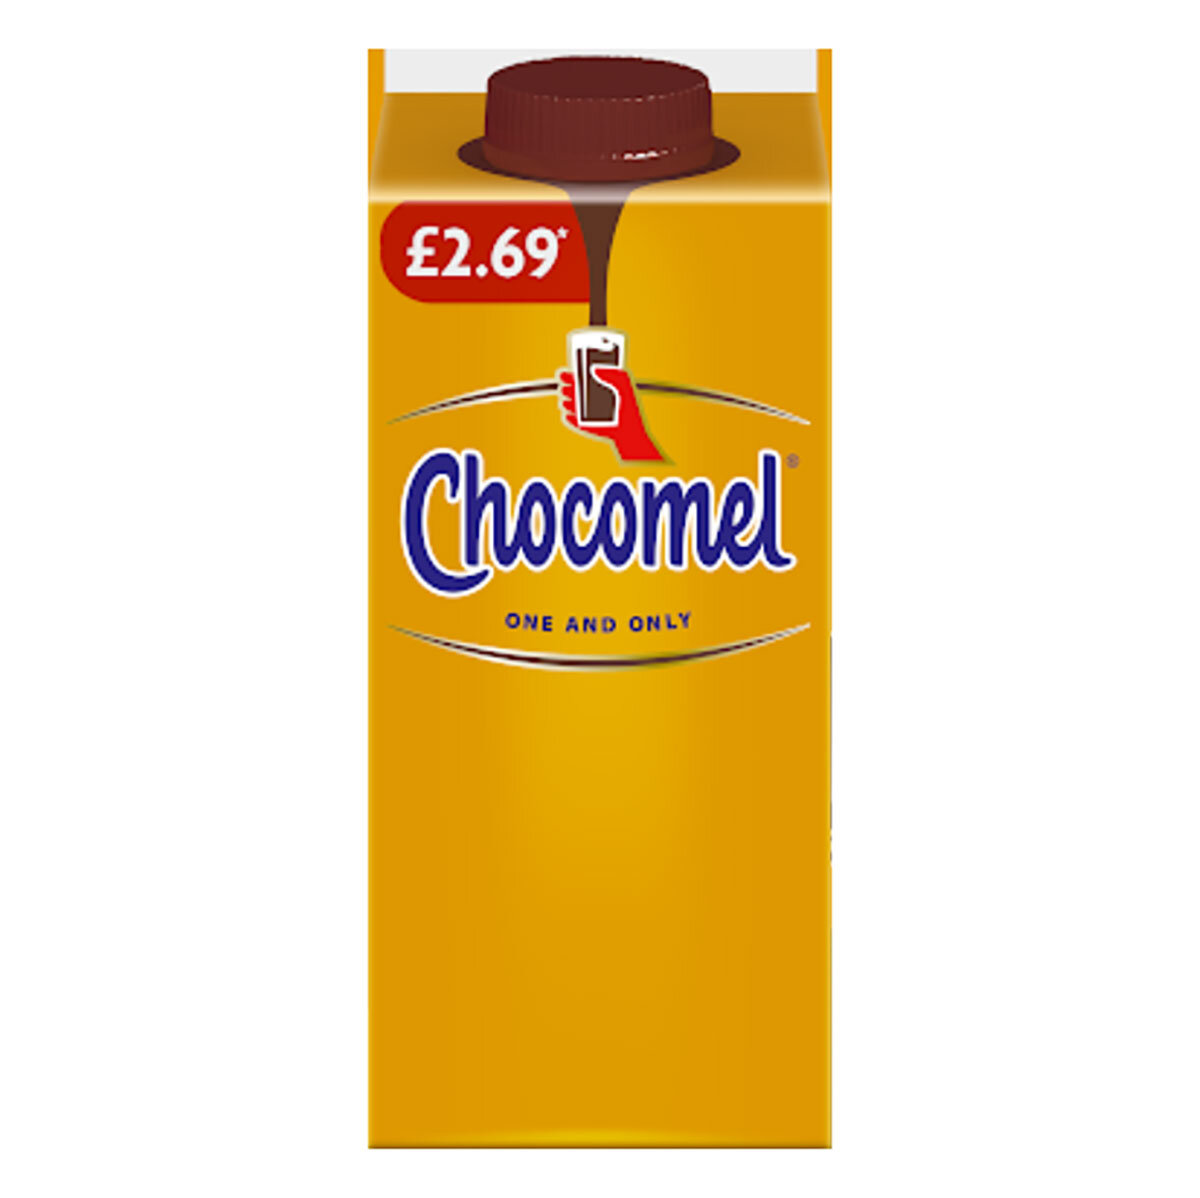 Chocomel Chocolate Milk Drink PMP £2.69, 750ml